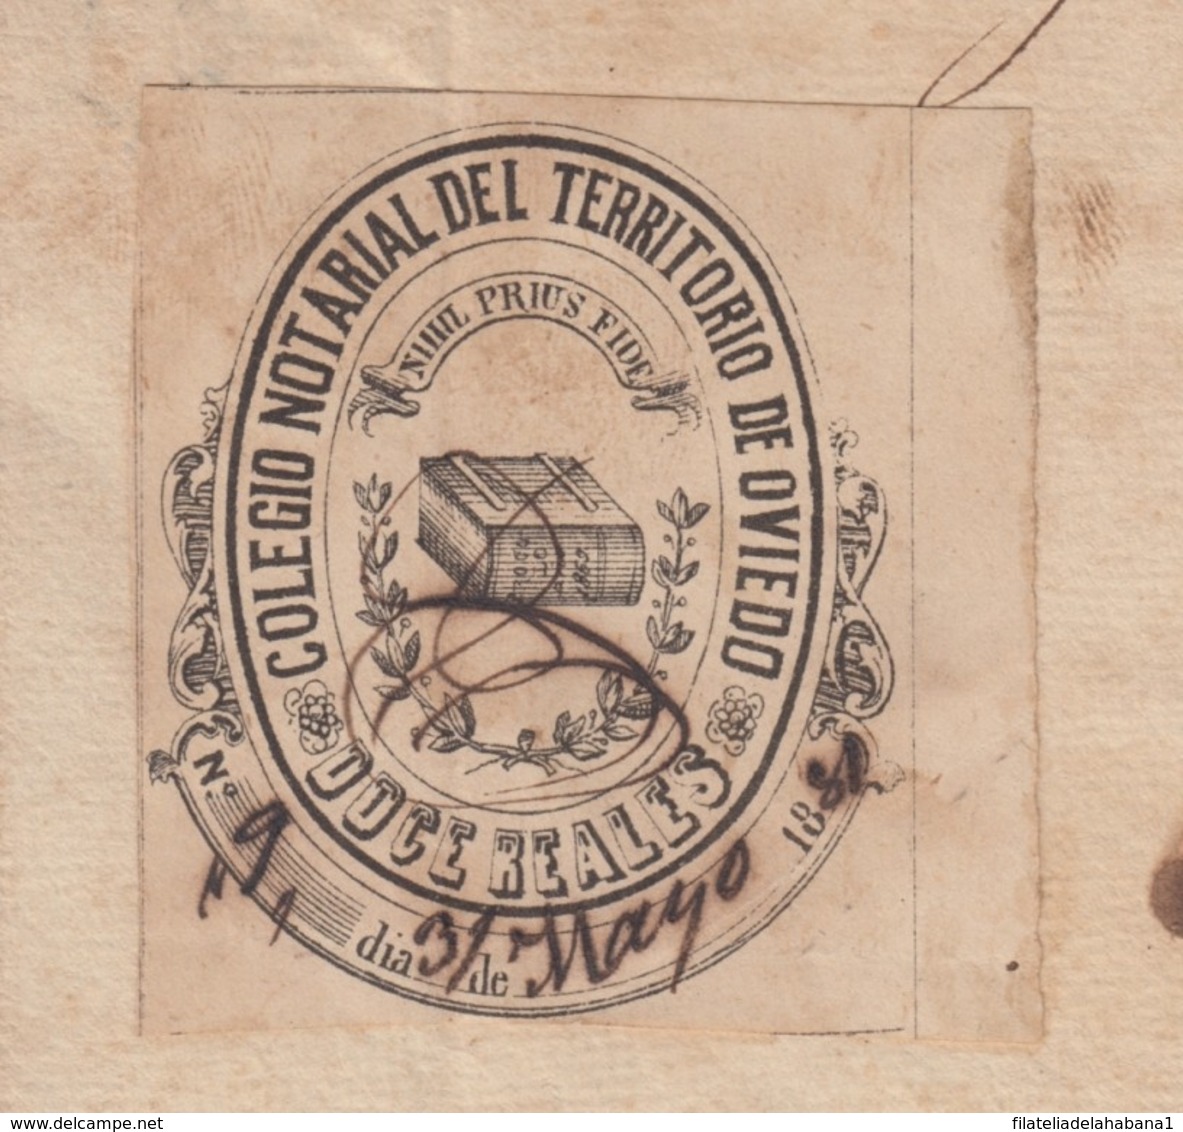 TMO-51 CUBA (LG1515) SPAIN ANT. REVENUE 1881 SEALLED PAPER + TIMBRE MOVIL 1886. - Impuestos